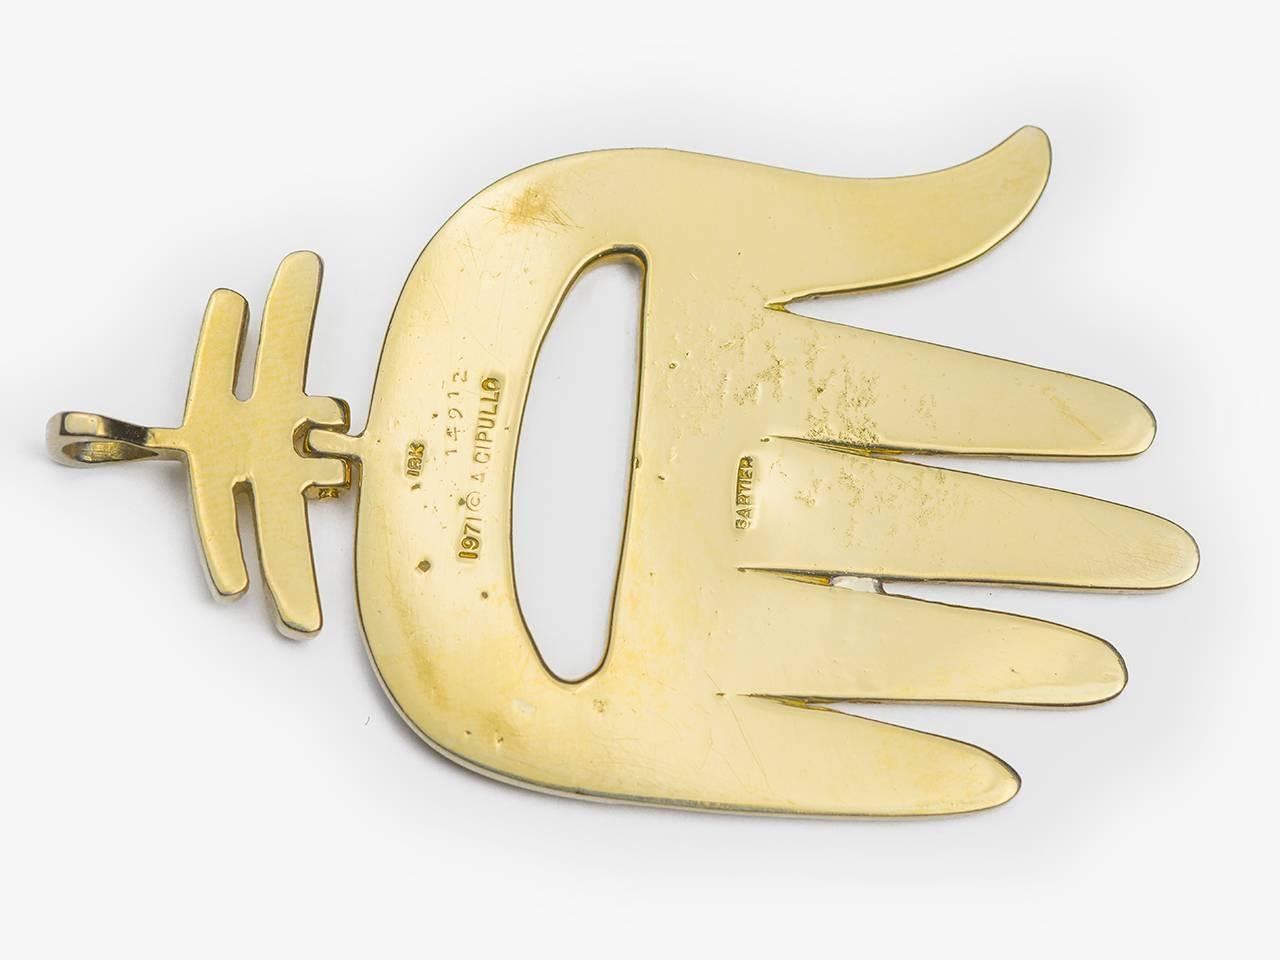 18k gold Hamsa pendant by Also Cipullo for Cartier. Signed CARTIER  A.Cipullo 14912 18k.